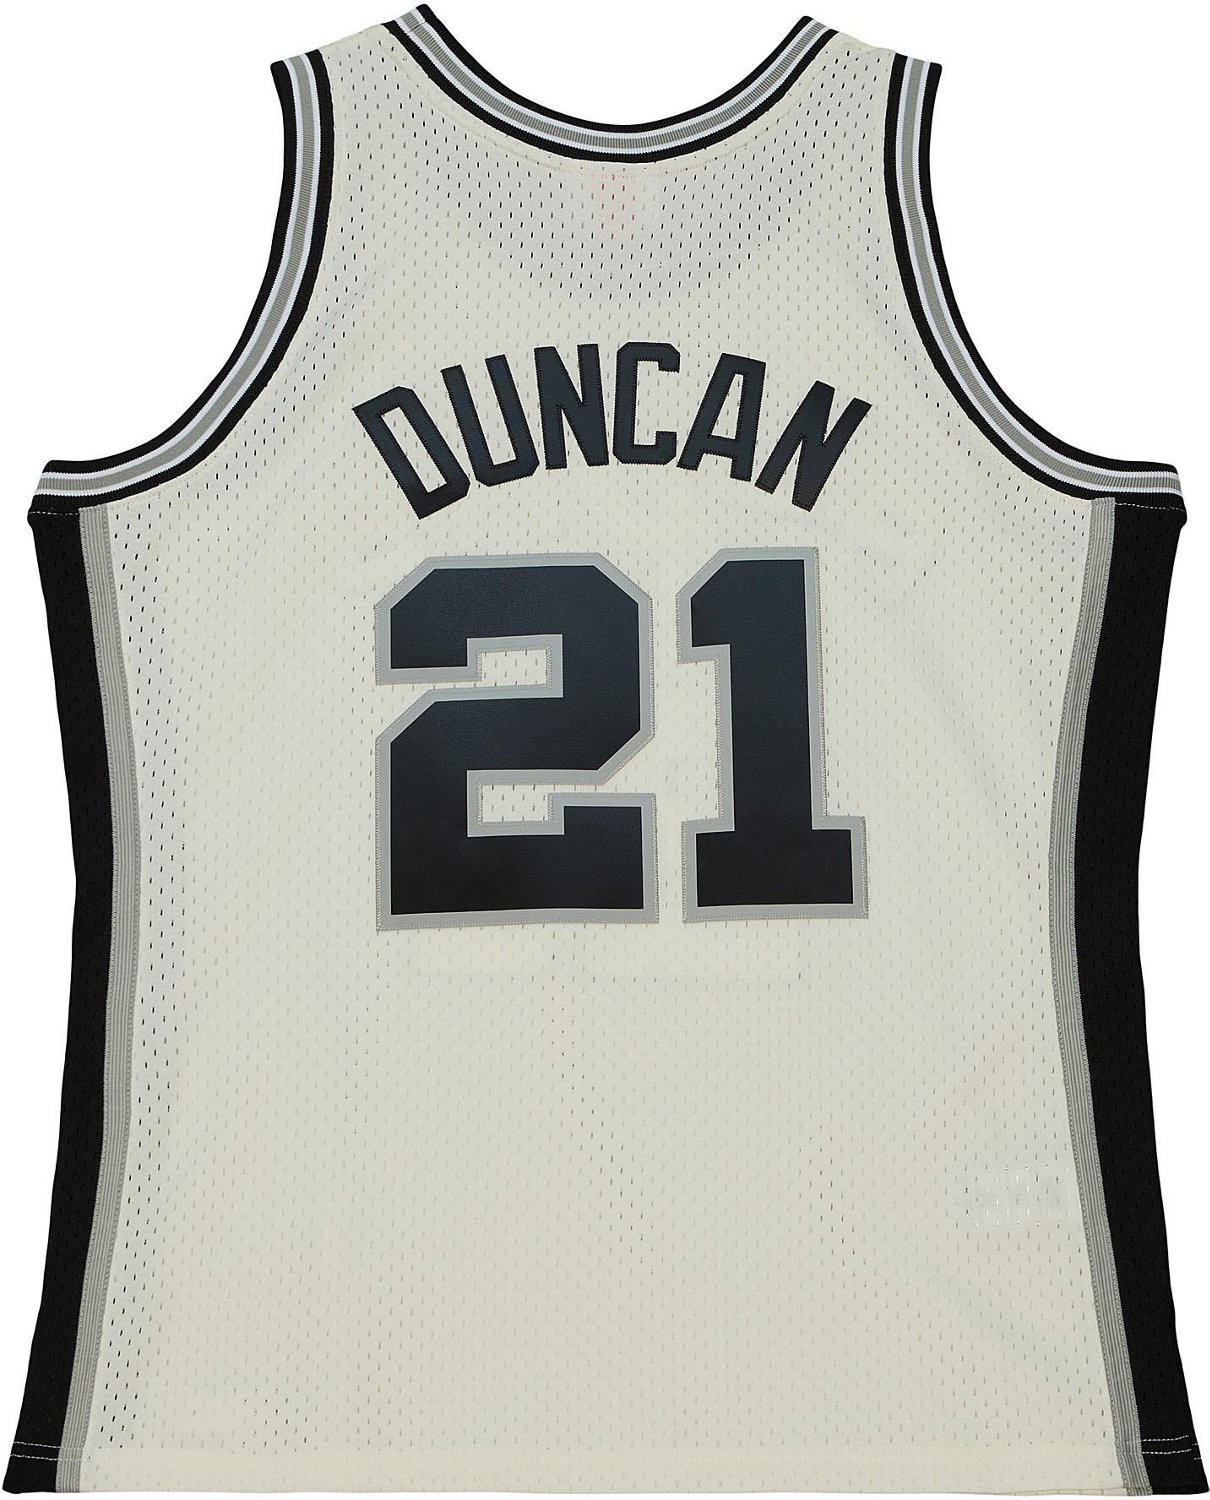 Youth Tim Duncan Jersey  San Antonio Spurs Mitchell & Ness